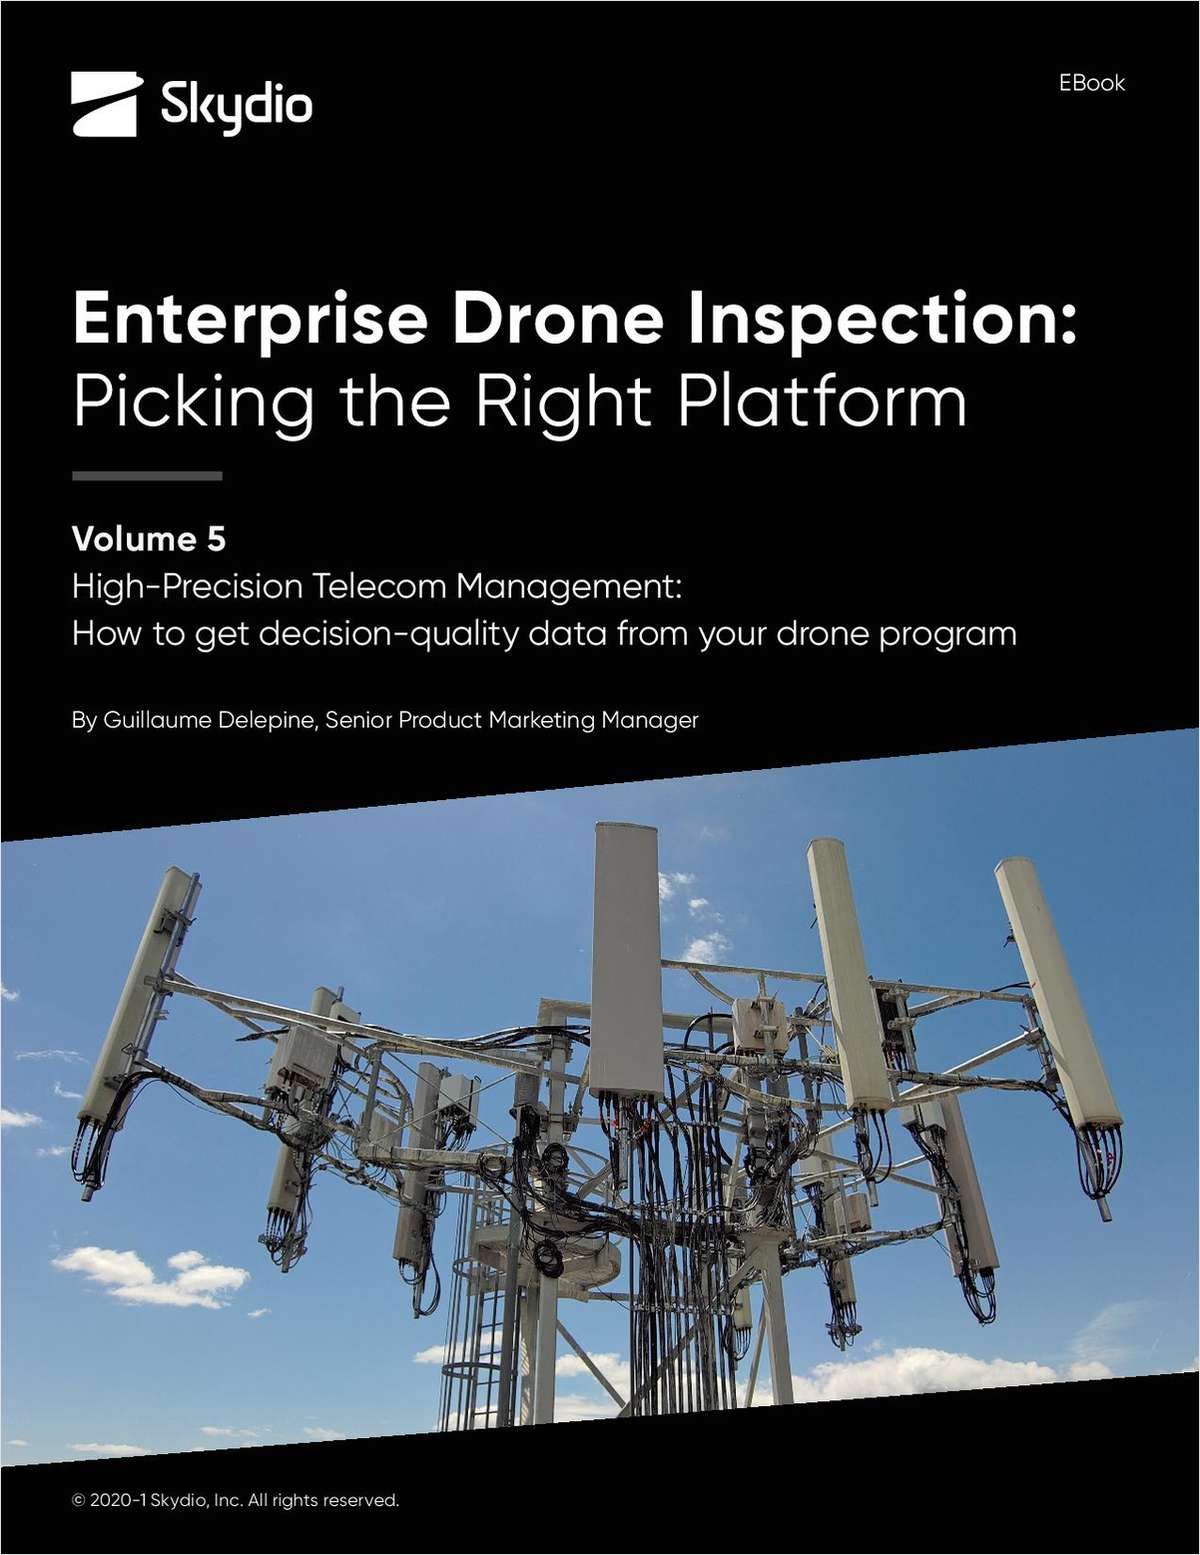 High-Precision Telecom Management: How to Get Decision-Quality Data From Your Drone Program